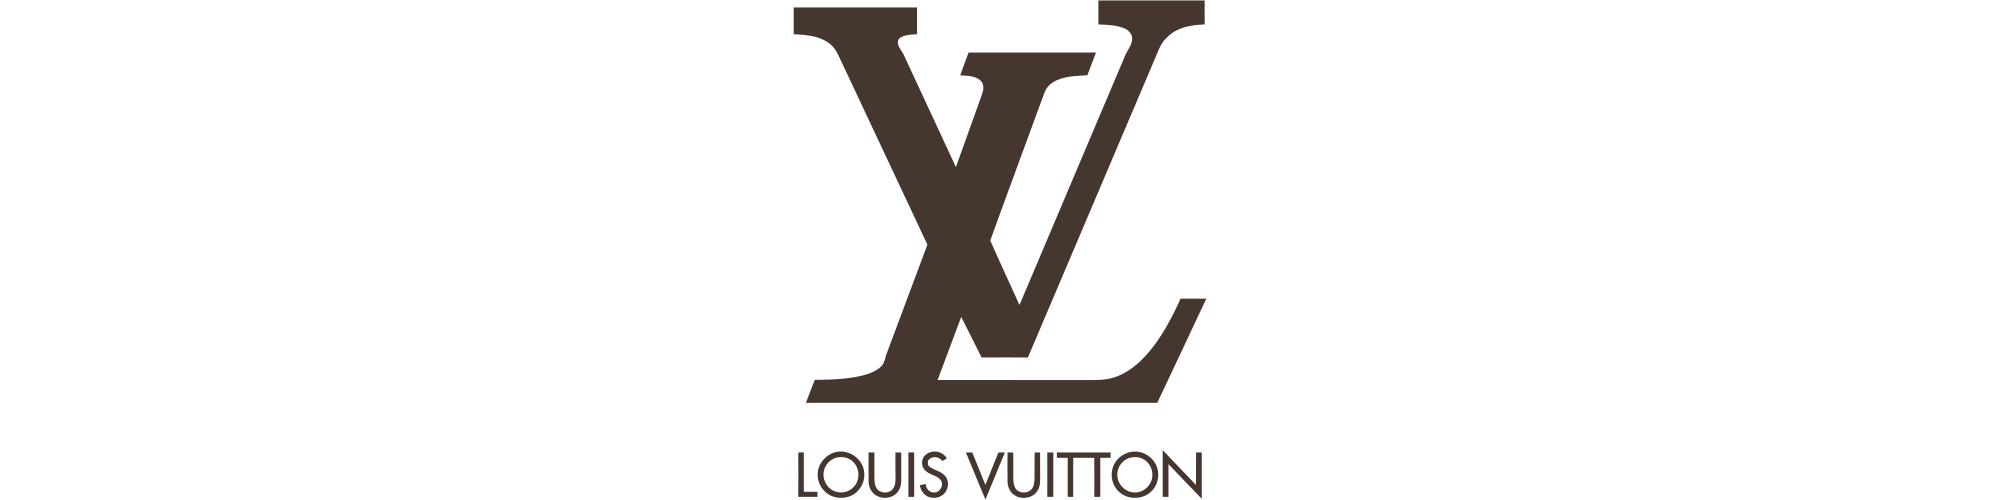 Louis Vuitton's logo uses brown color psychology